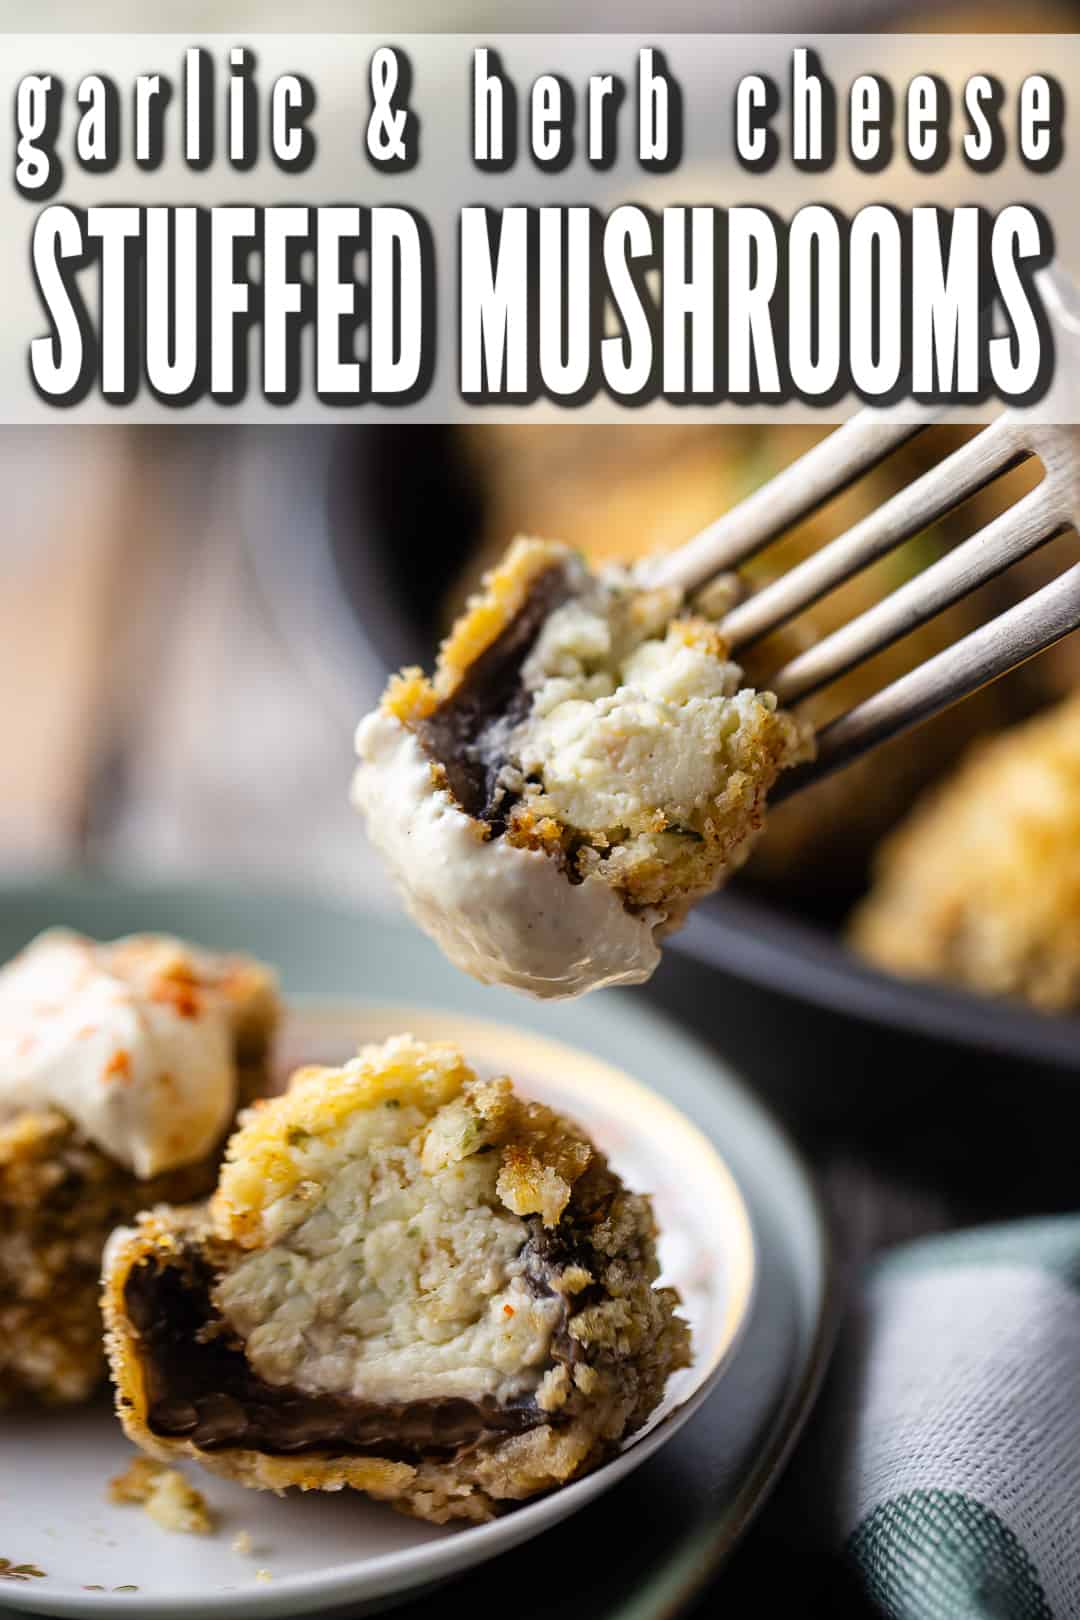 Stuffed mushrooms recipe, prepared and served with a creamy horseradish and Dijon dip.